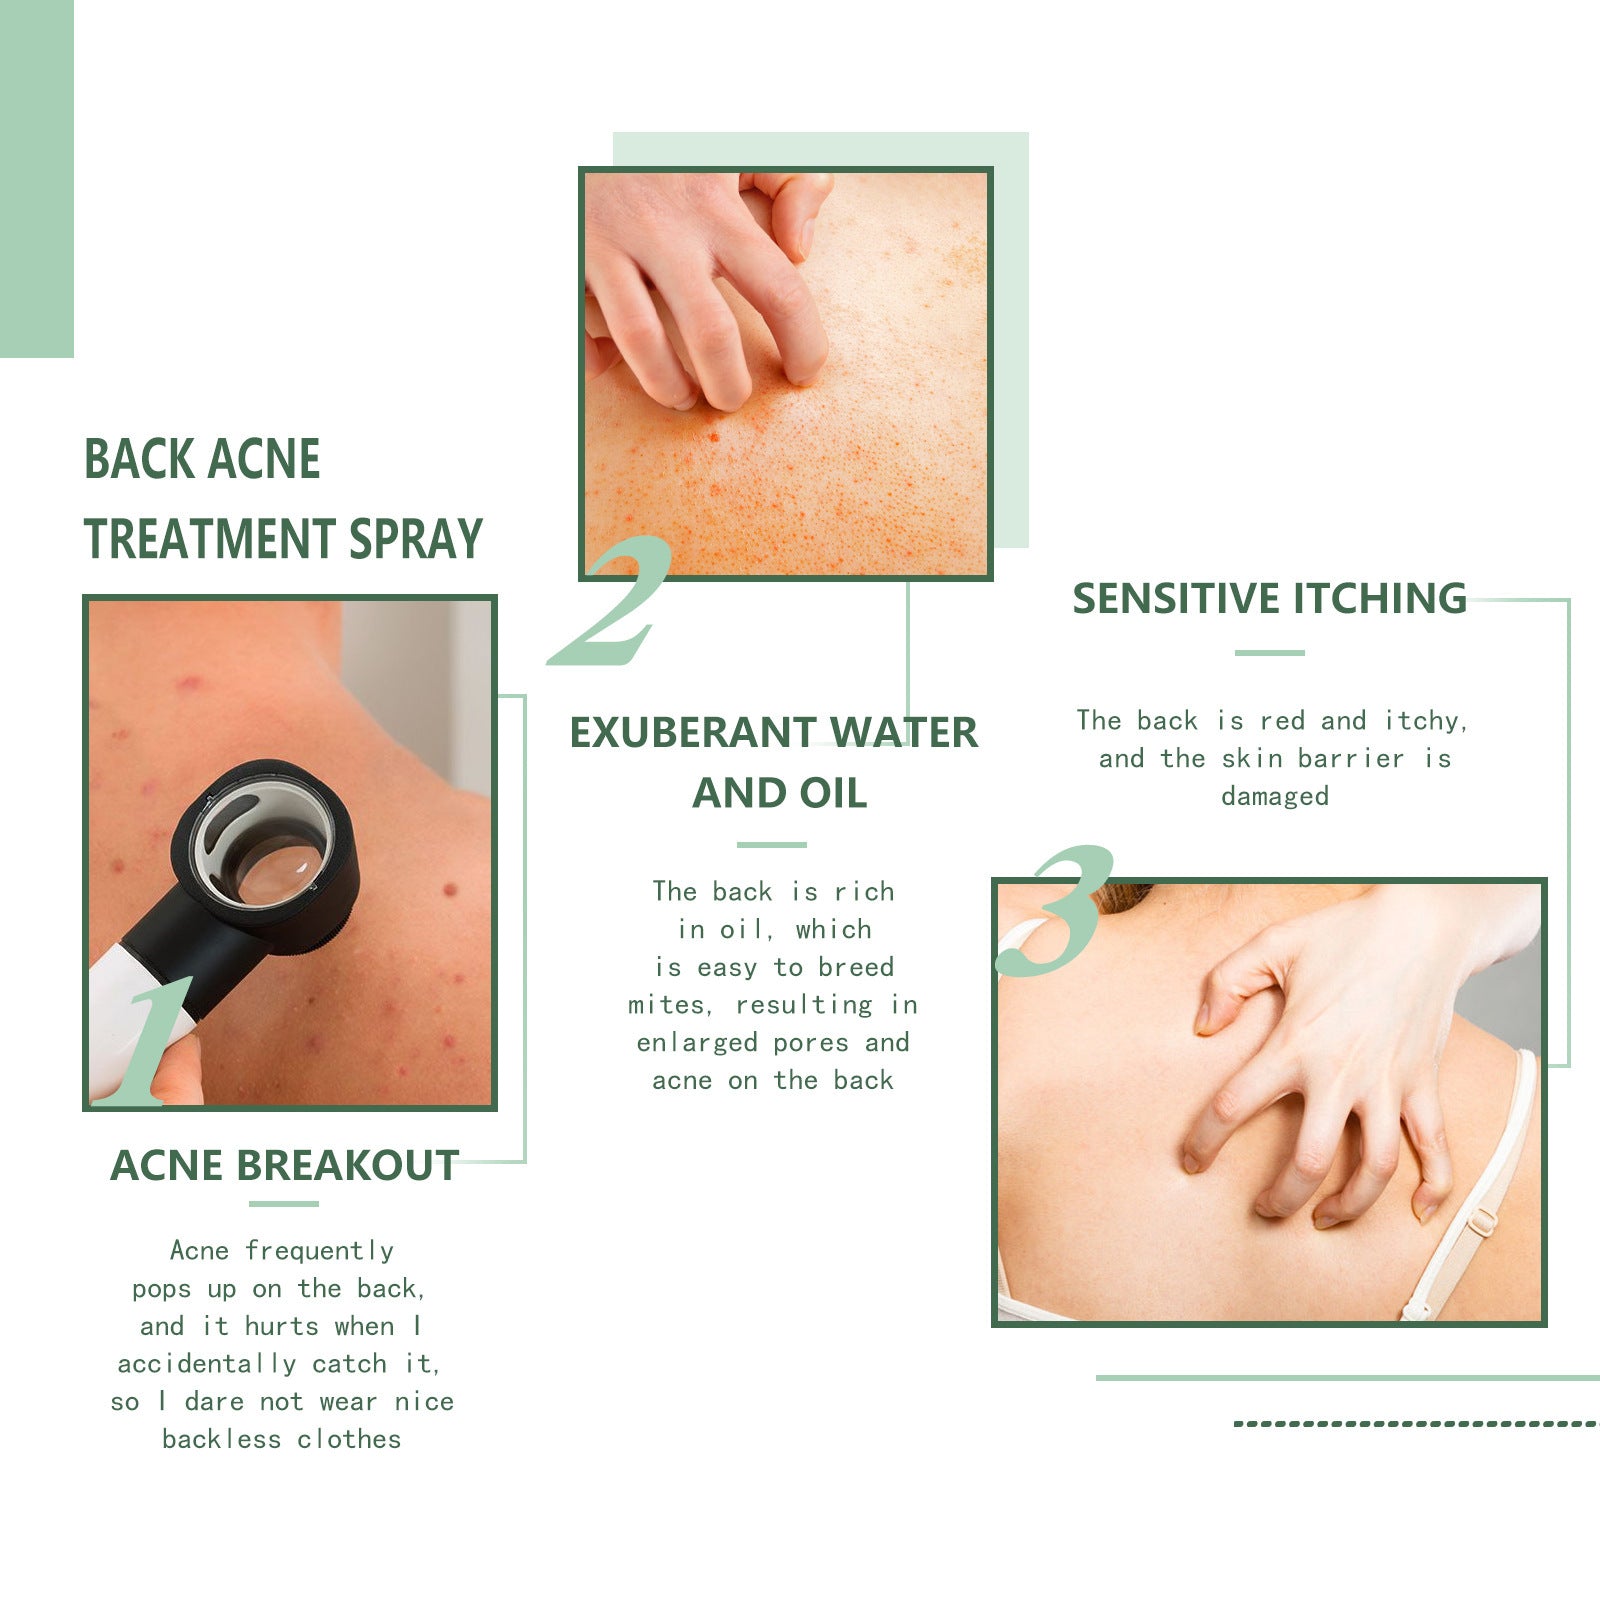 Back Acne Treatment Spray